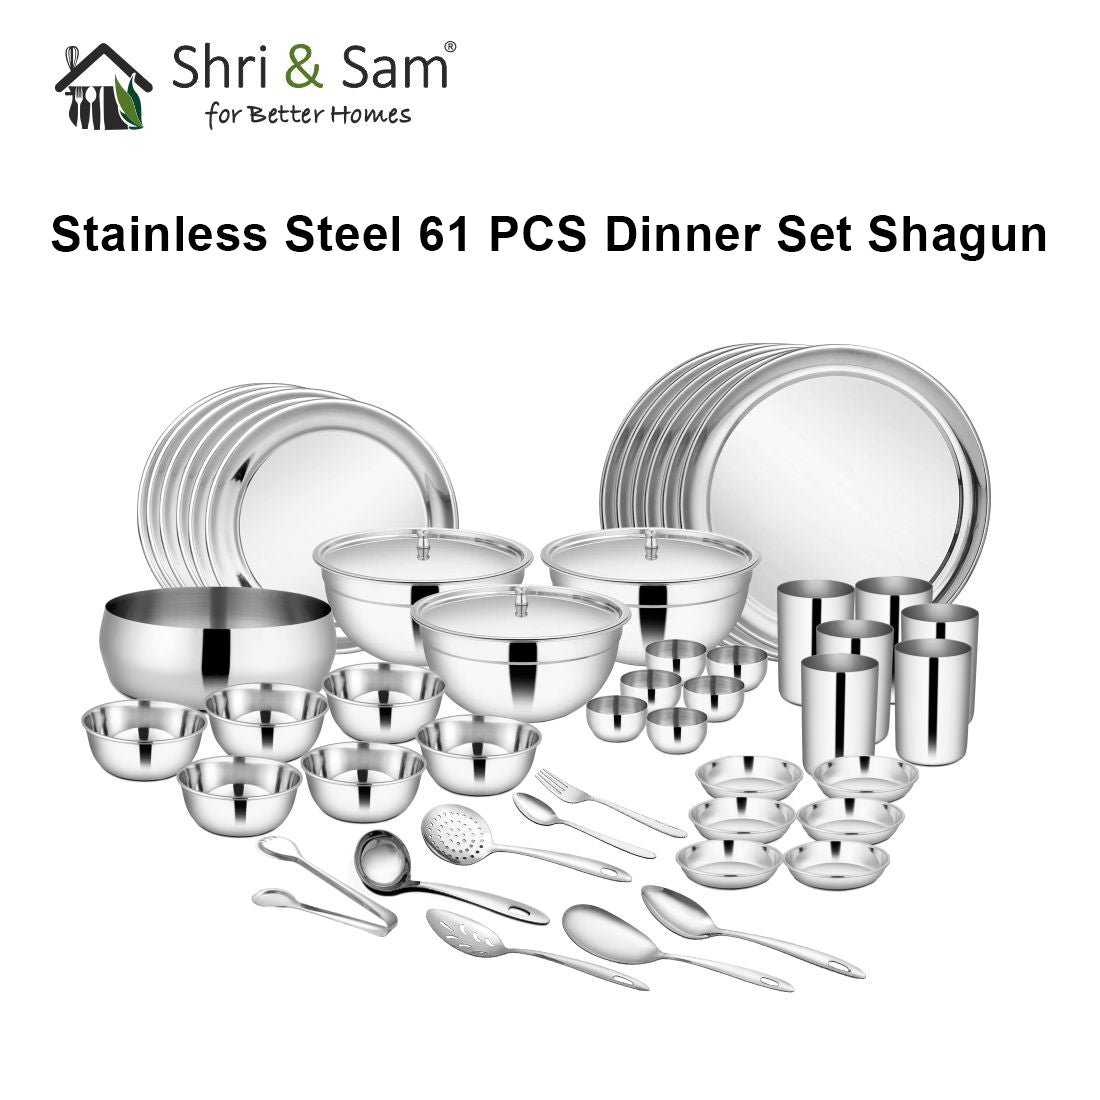 Stainless Steel 61 PCS Dinner Set (6 People) Shagun